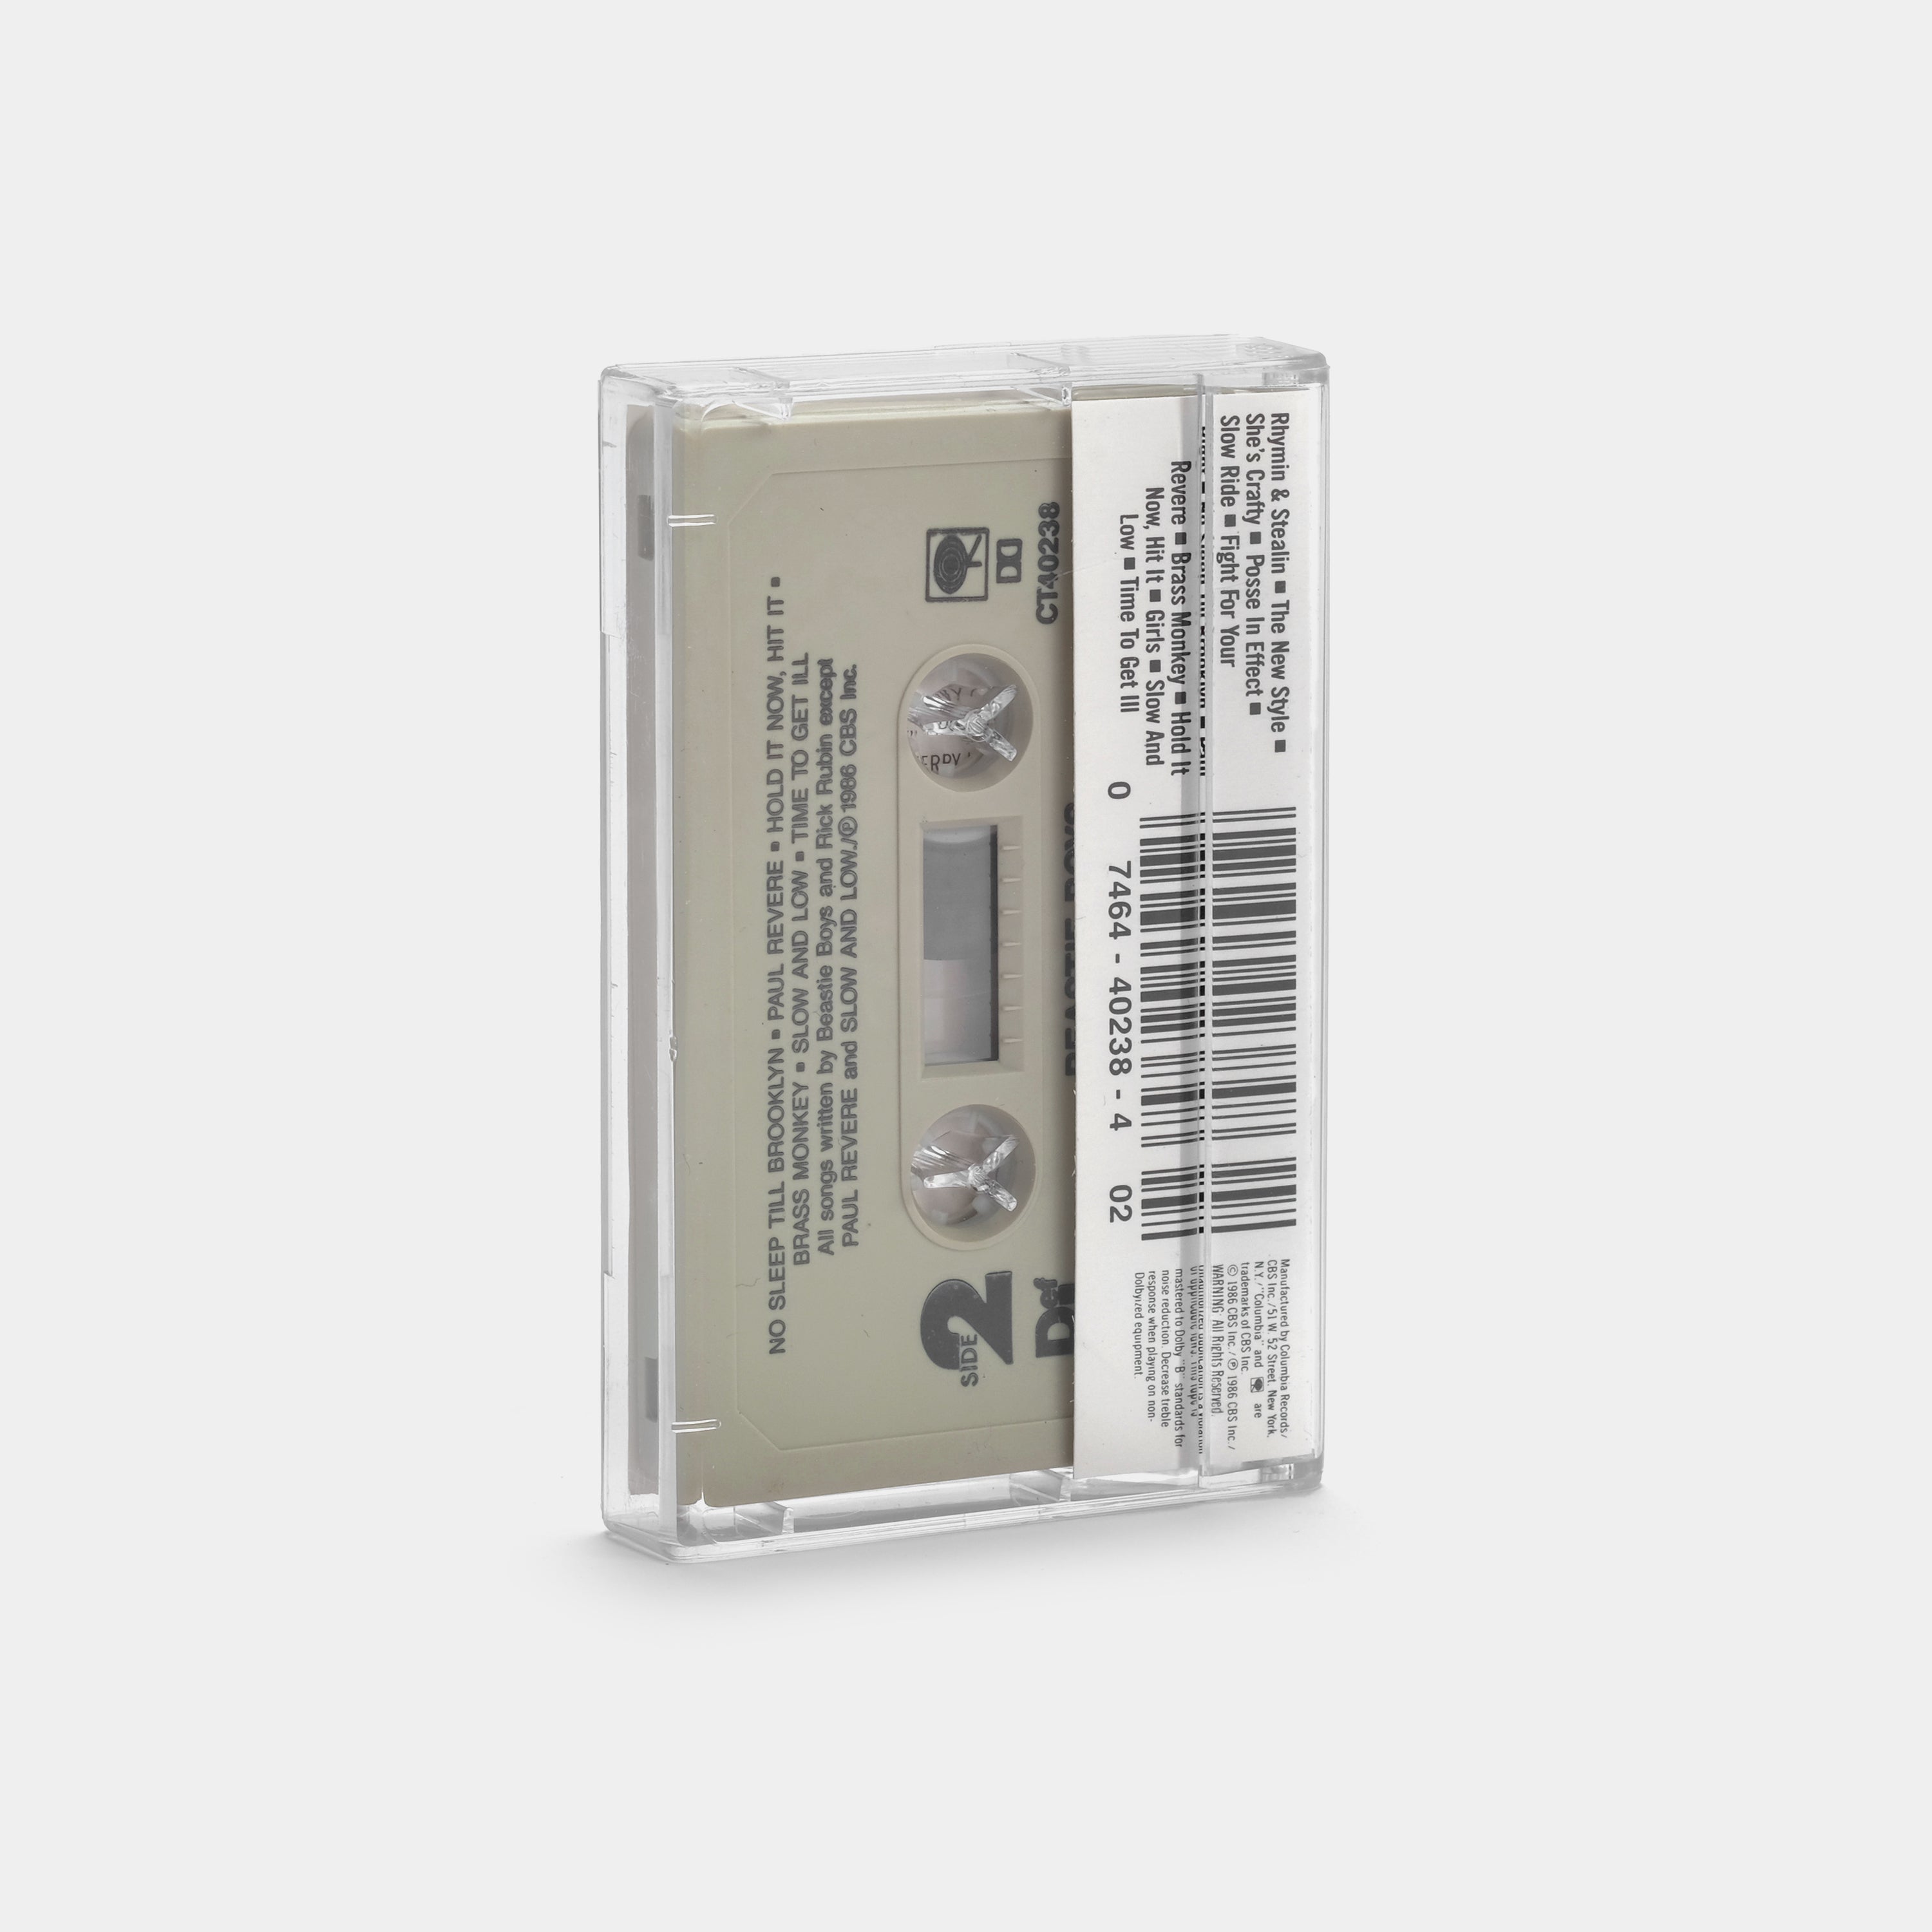 Beastie Boys - Licensed To Ill Cassette Tape